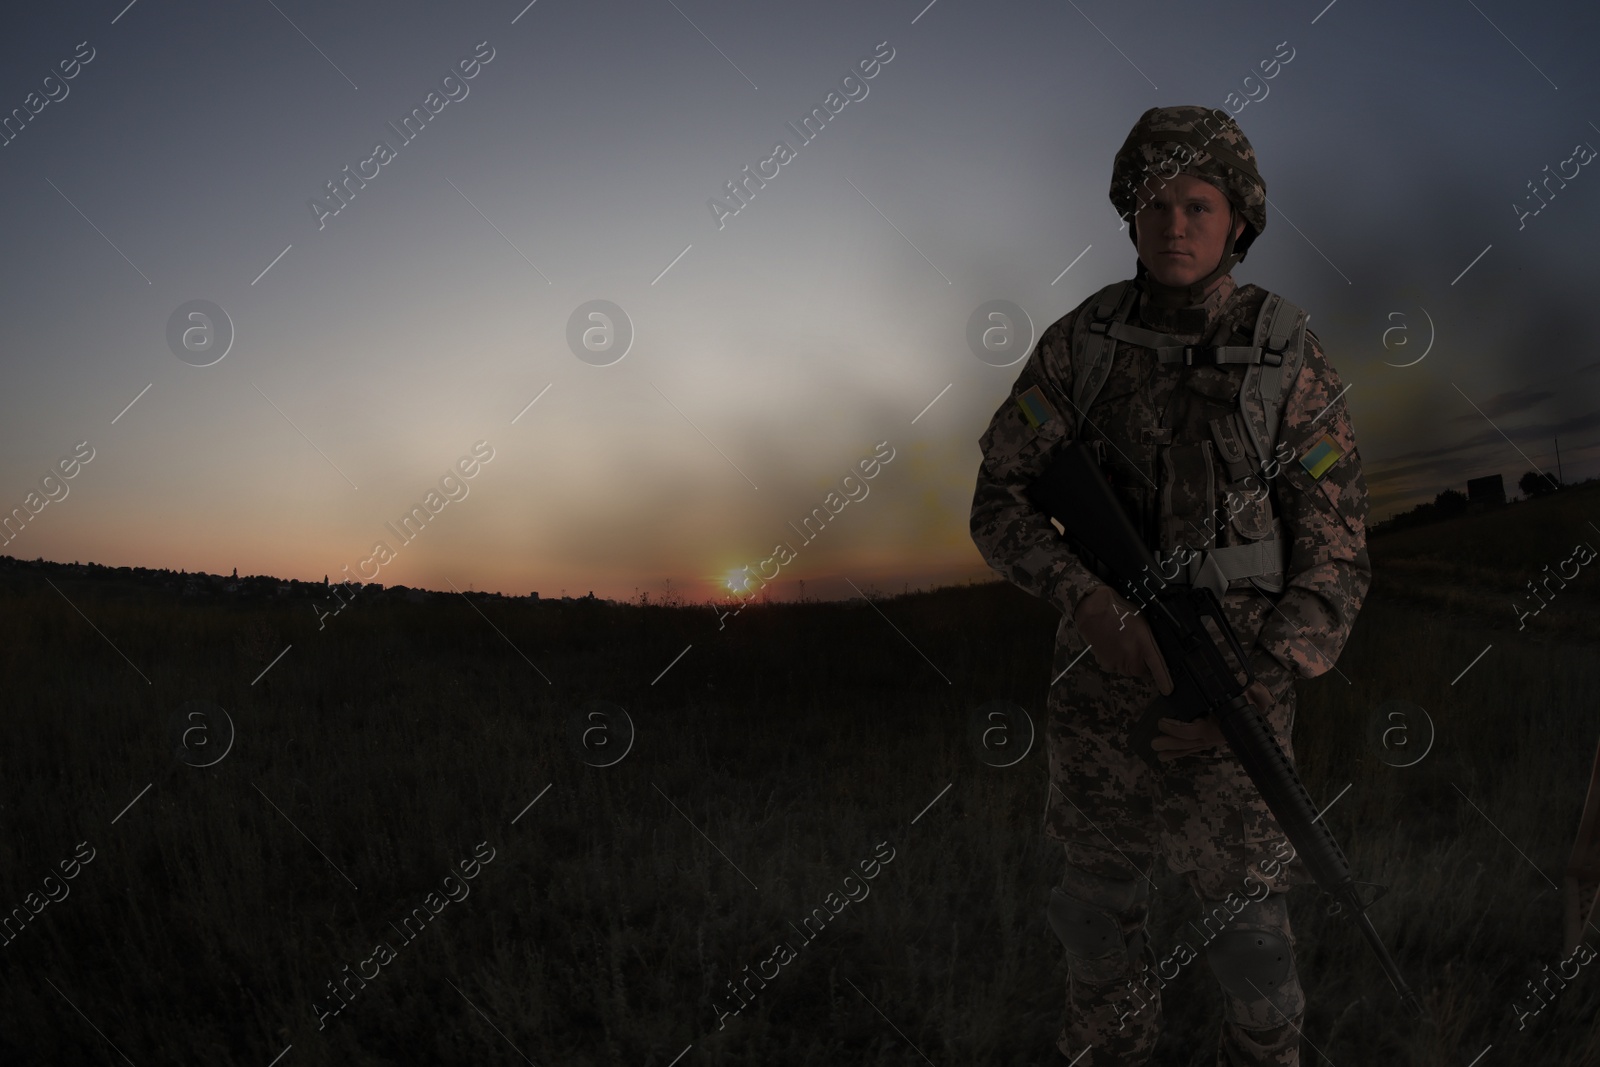 Image of Ukrainian soldier with machine gun on battlefield at sunset